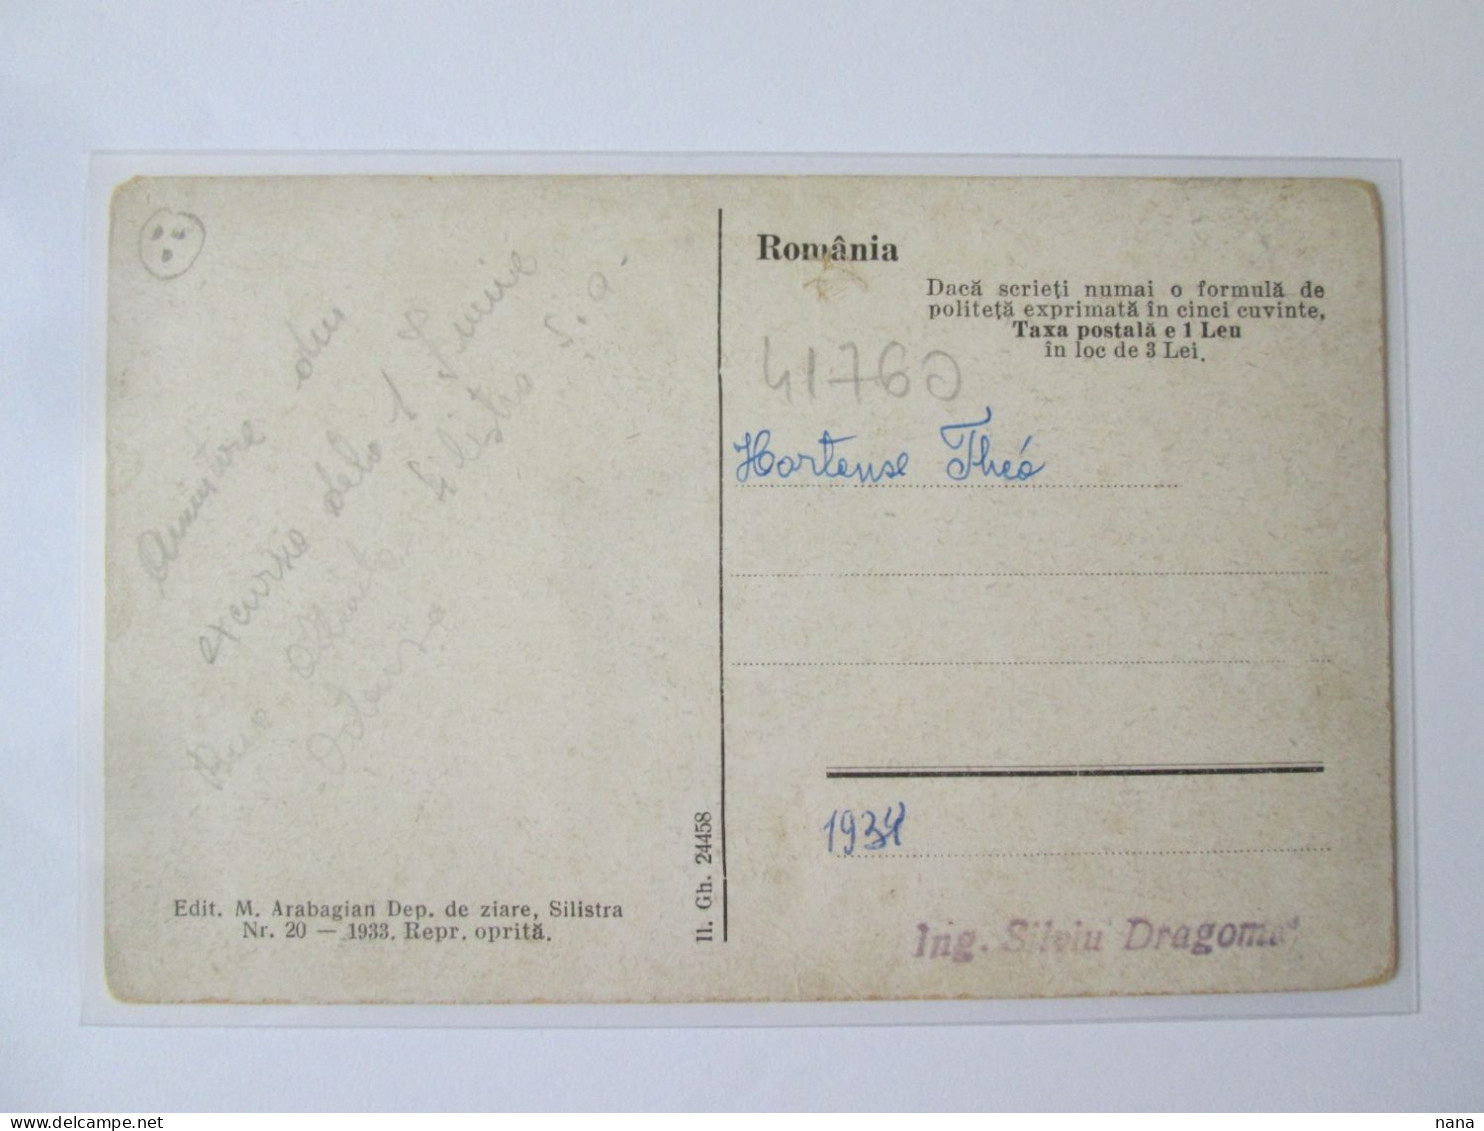 Bulgaria Former Romania-Silistra:Mahala Turcească/Turkish Slum 1933 Written Postcard,see Pictures - Bulgarien